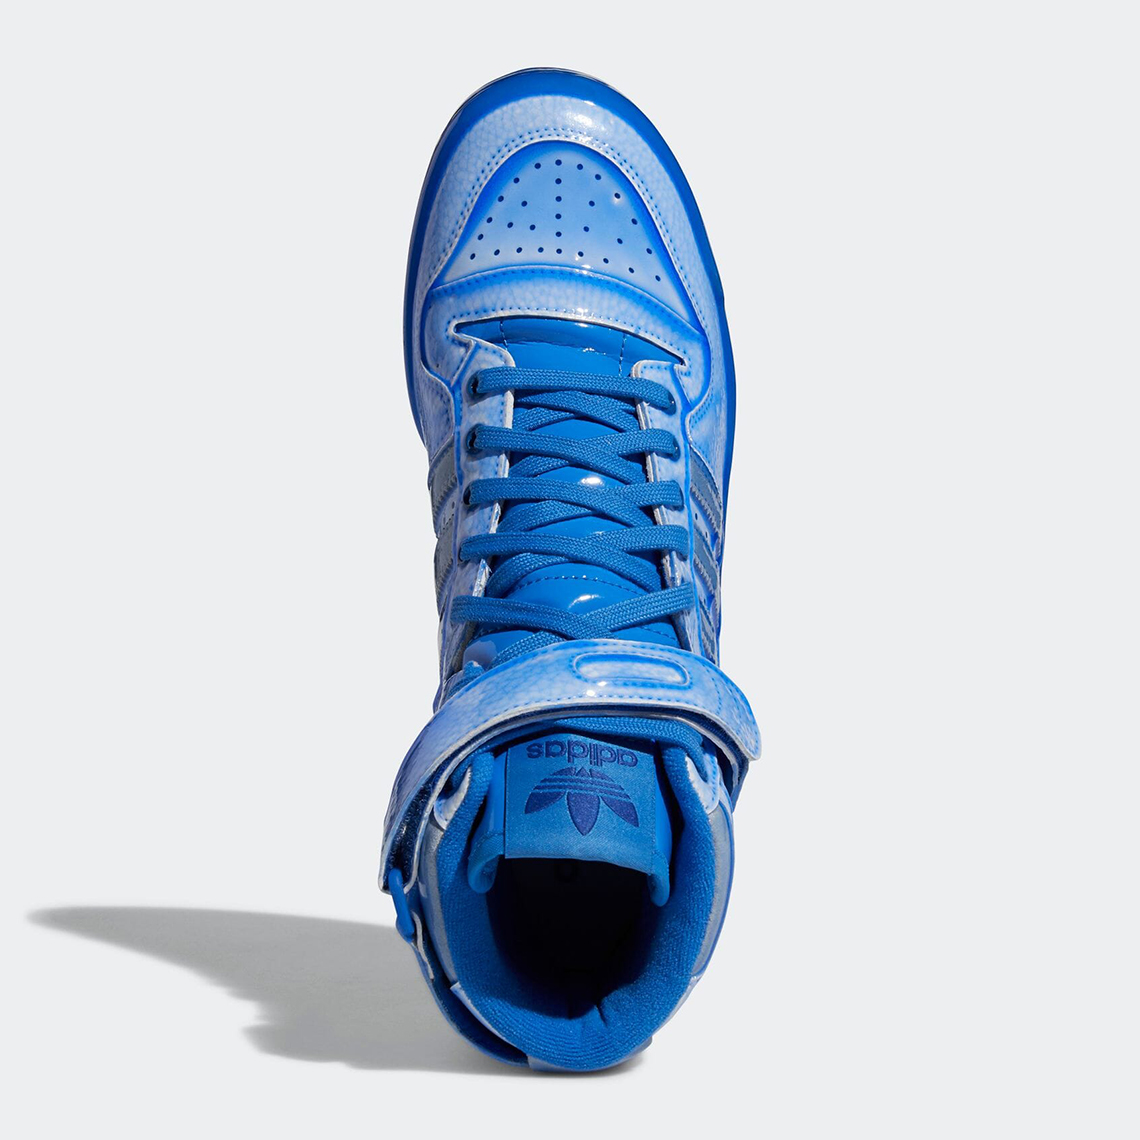 Jeremy Scott Adidas Forum Hi Dipped Blue G54995 6